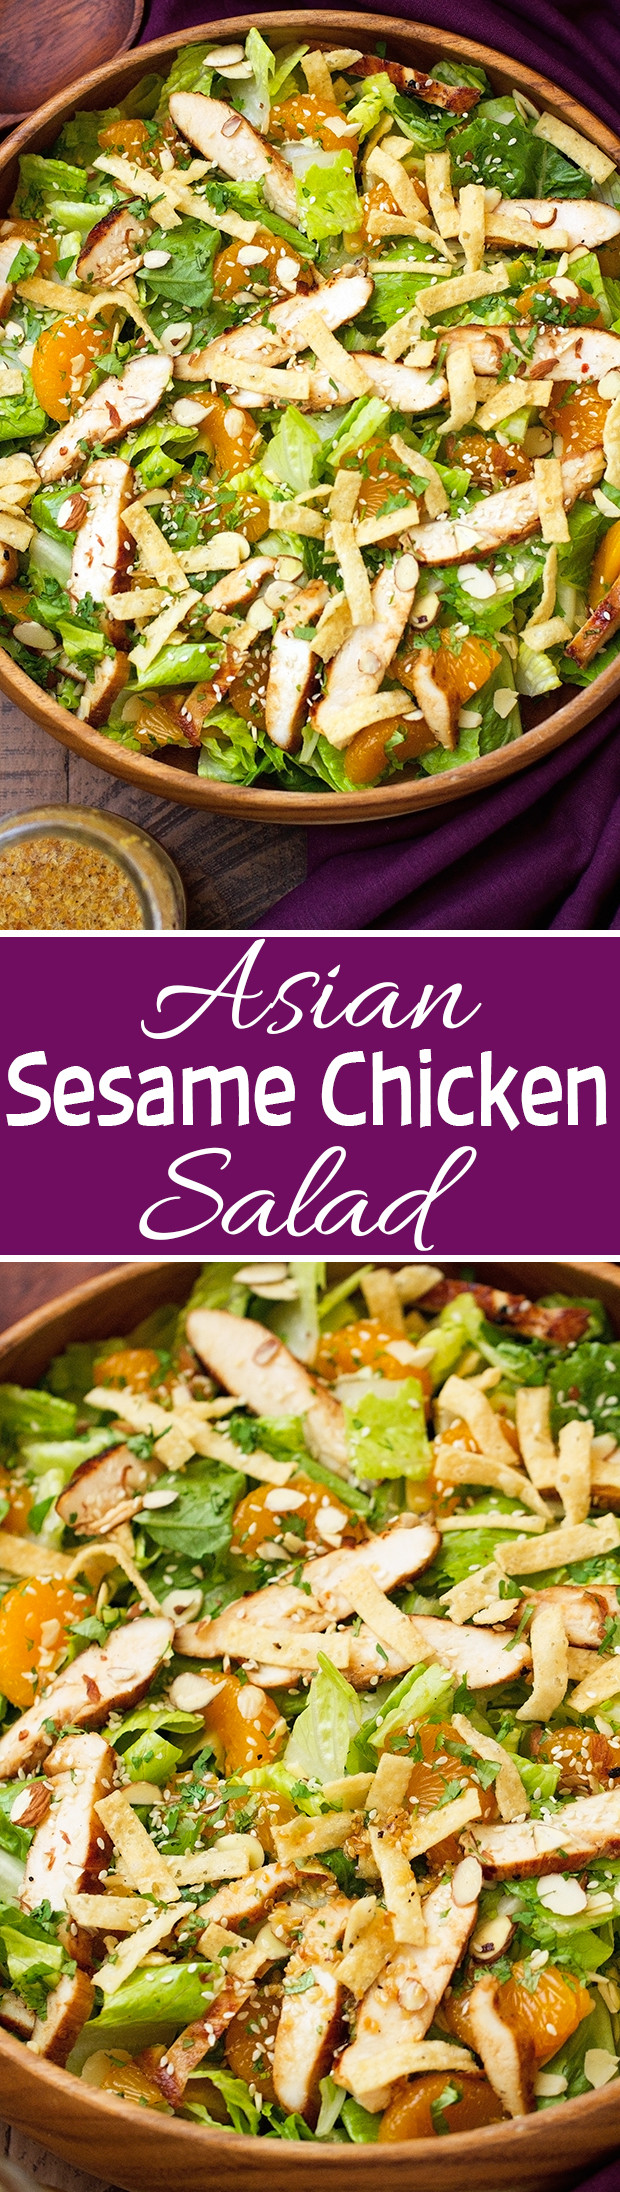 Panera Bread Asian Sesame Salad With Chicken
 Asian Sesame Chicken Salad Recipe